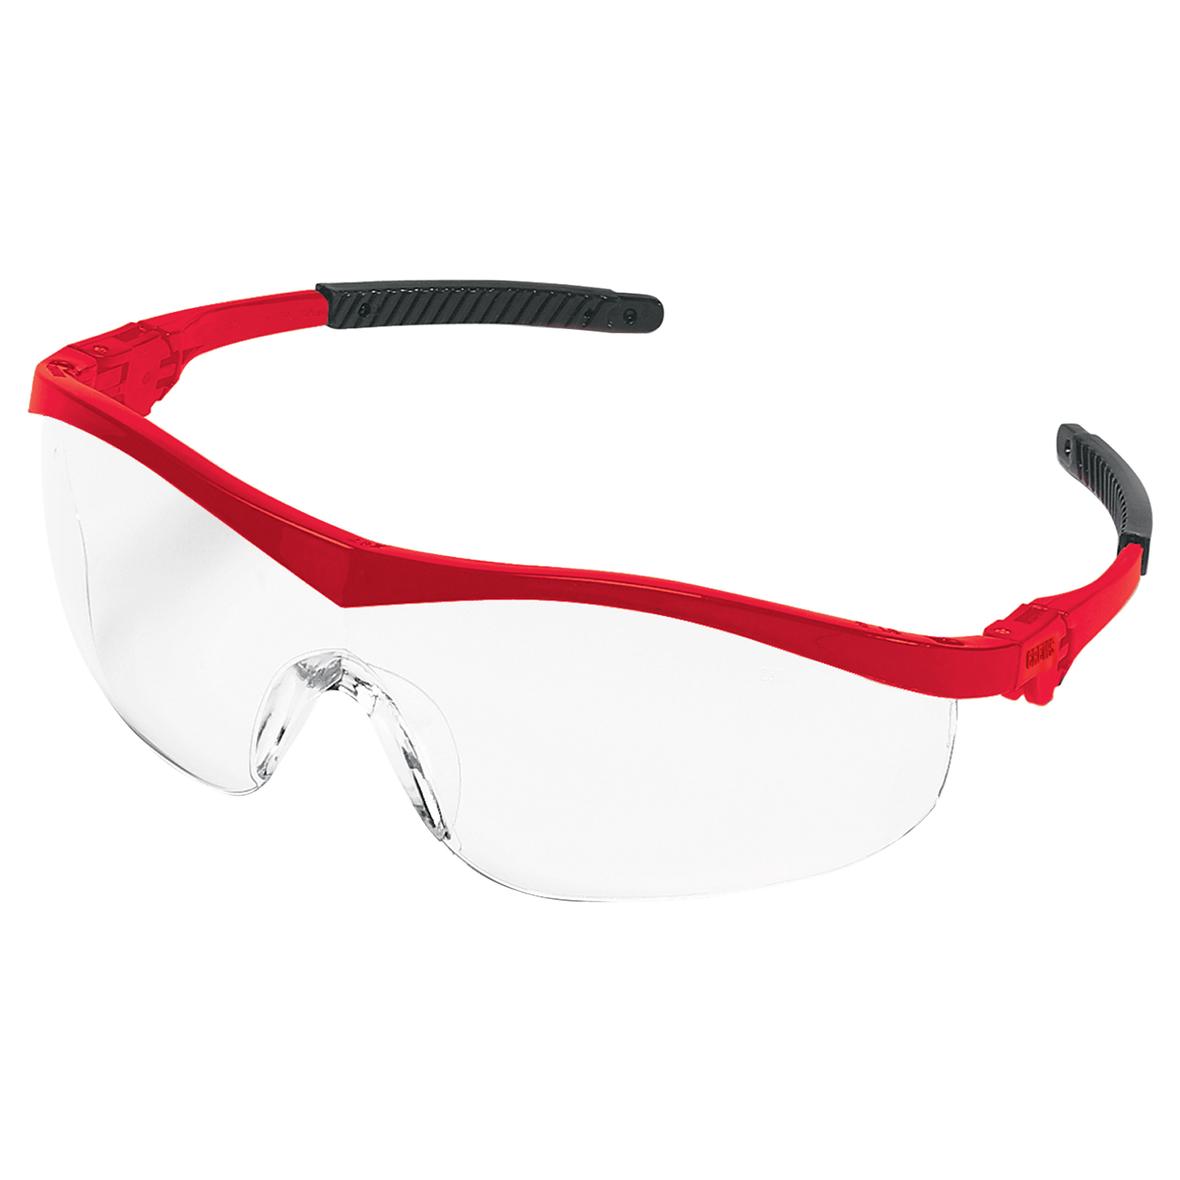 Crews ST130 Storm Safety Glasses - Red Frame, Clear Lens